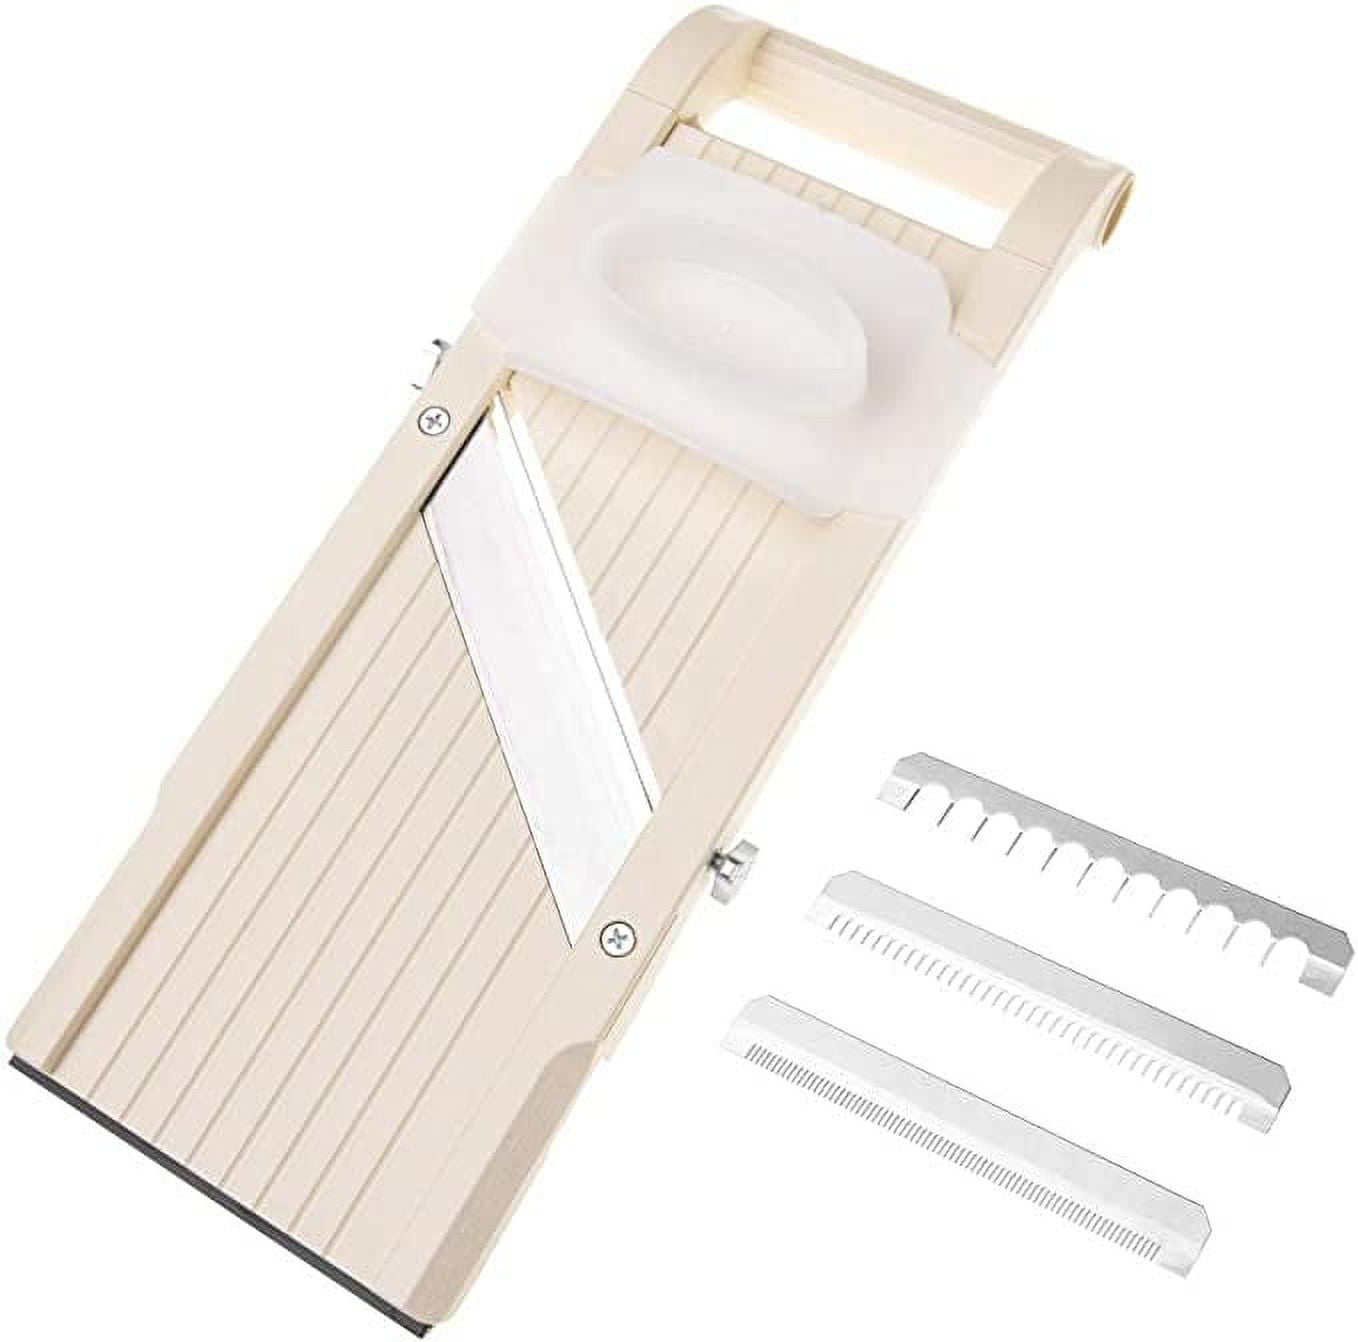  Benriner Mandoline Slicer, with 4 Japanese Stainless Steel  Blades, BPA Free, New Model : Home & Kitchen